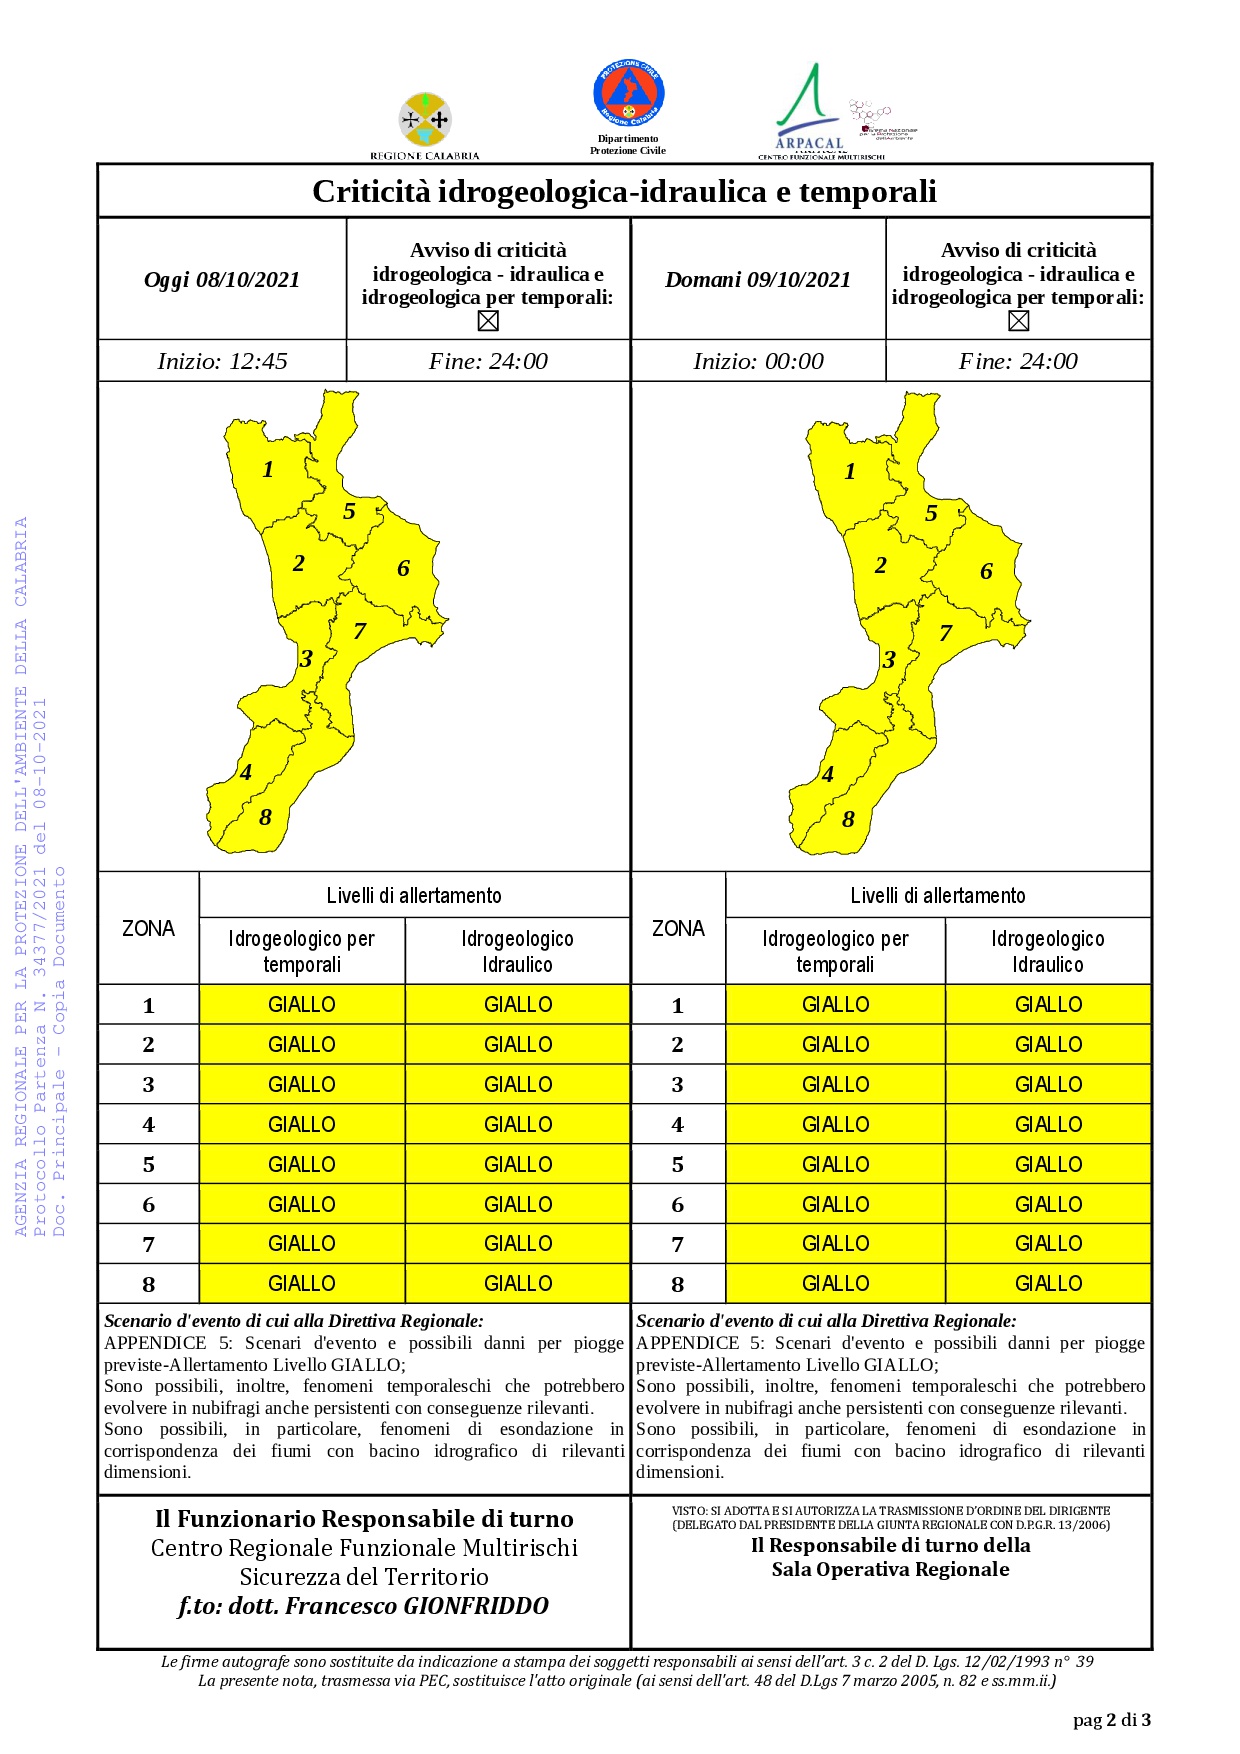 Criticità idrogeologica-idraulica e temporali in Calabria 08-10-2021